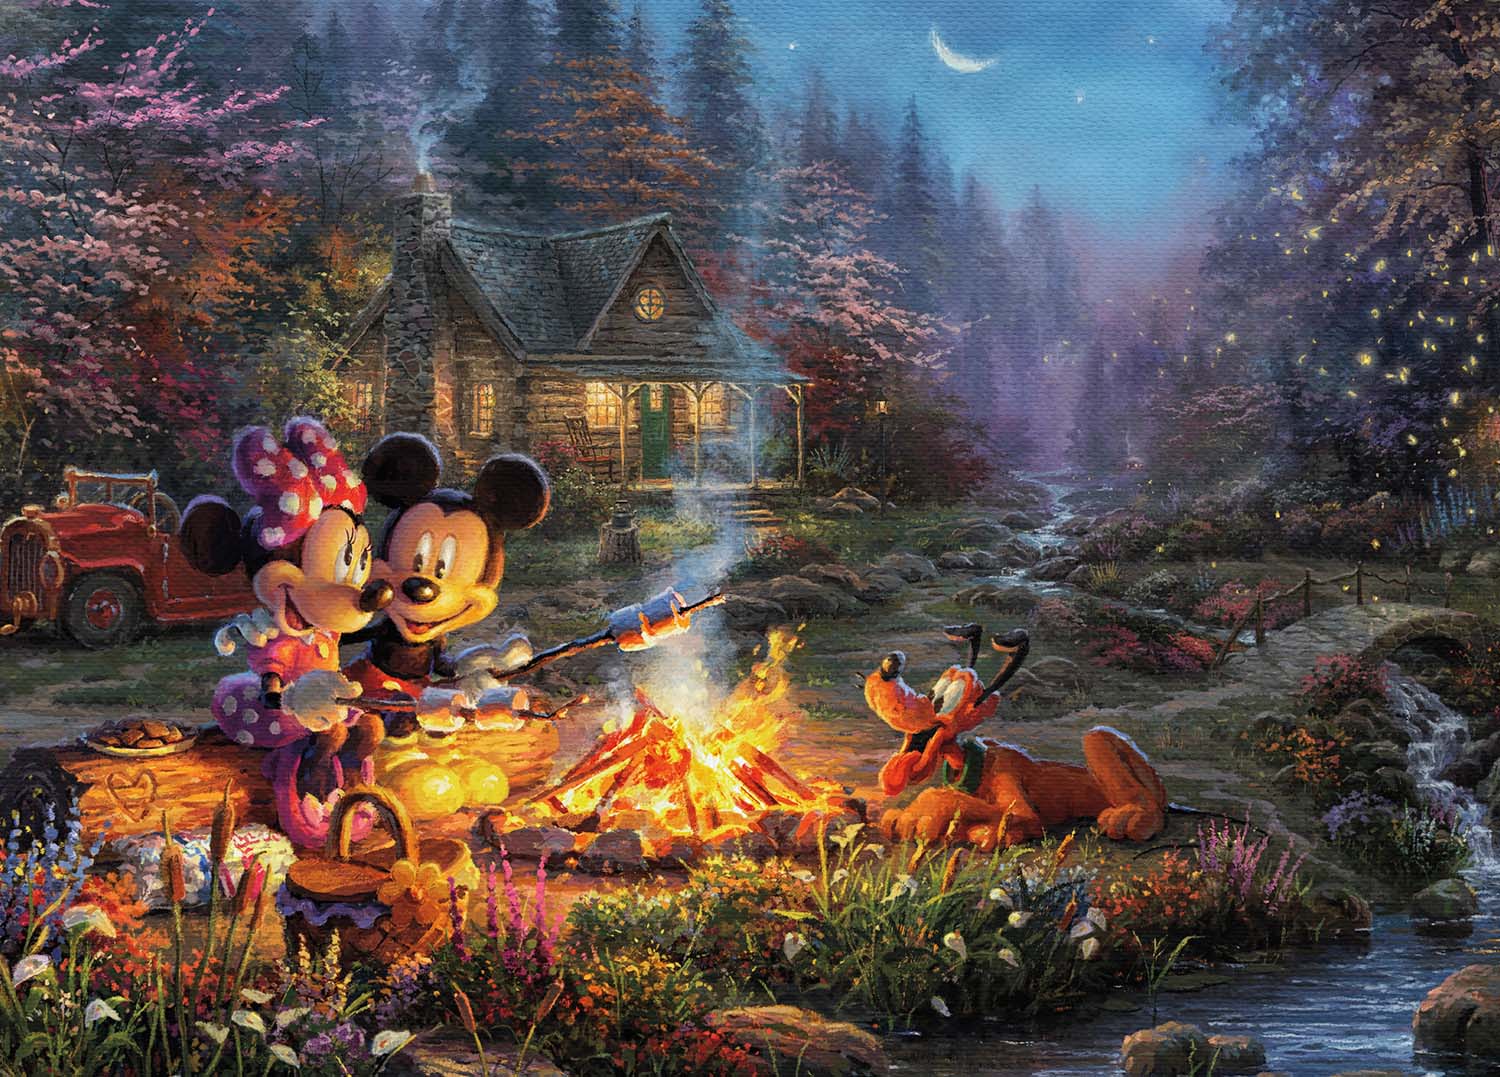 Mickey & Minnie Sweetheart Campfire Disney Jigsaw Puzzle